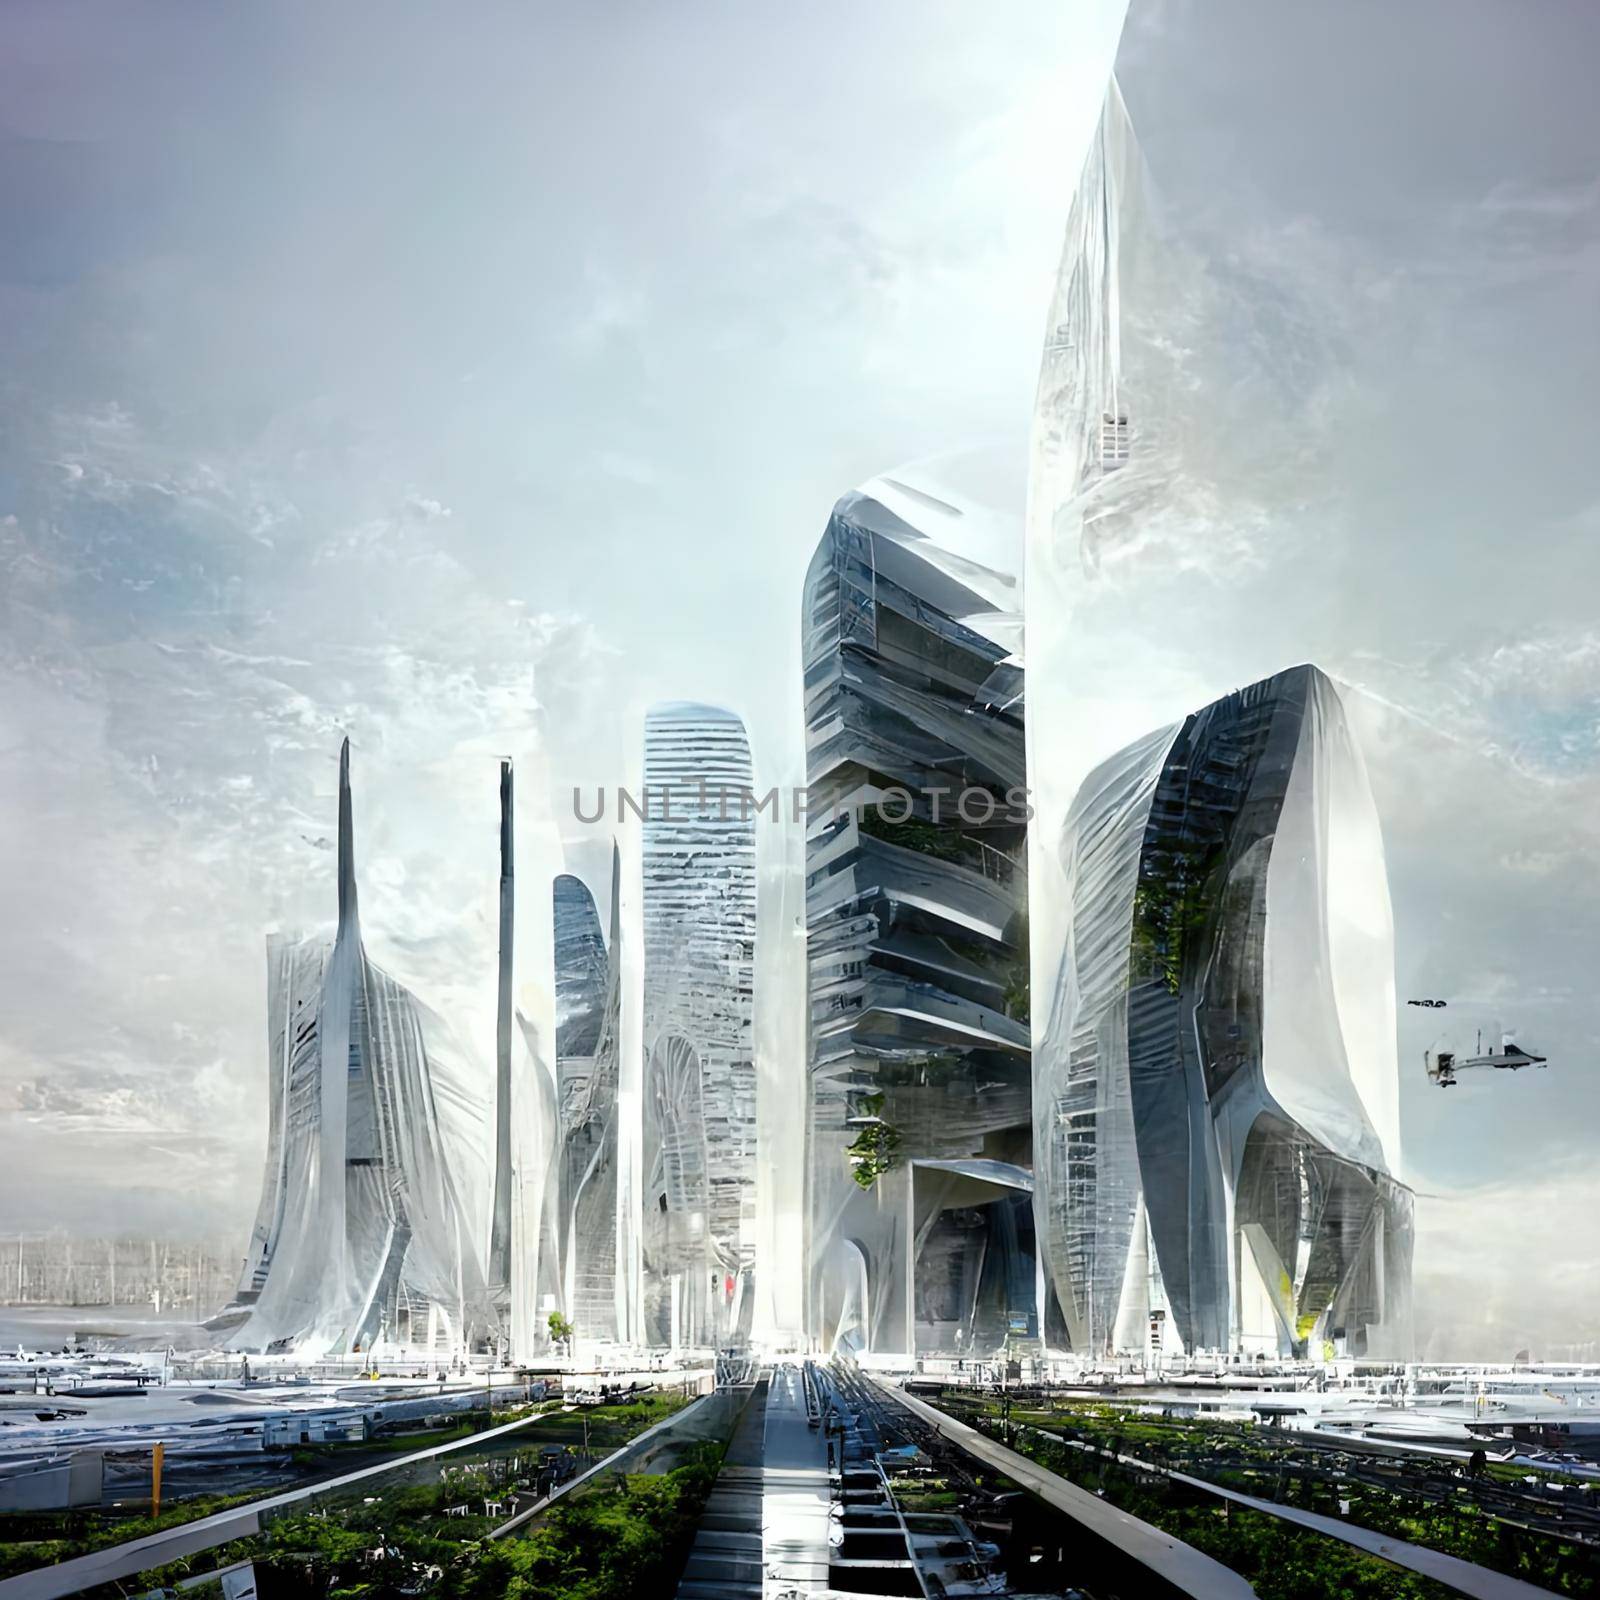 Techno mega city urban and futuristic technology concepts, original 3d rendering by 2ragon